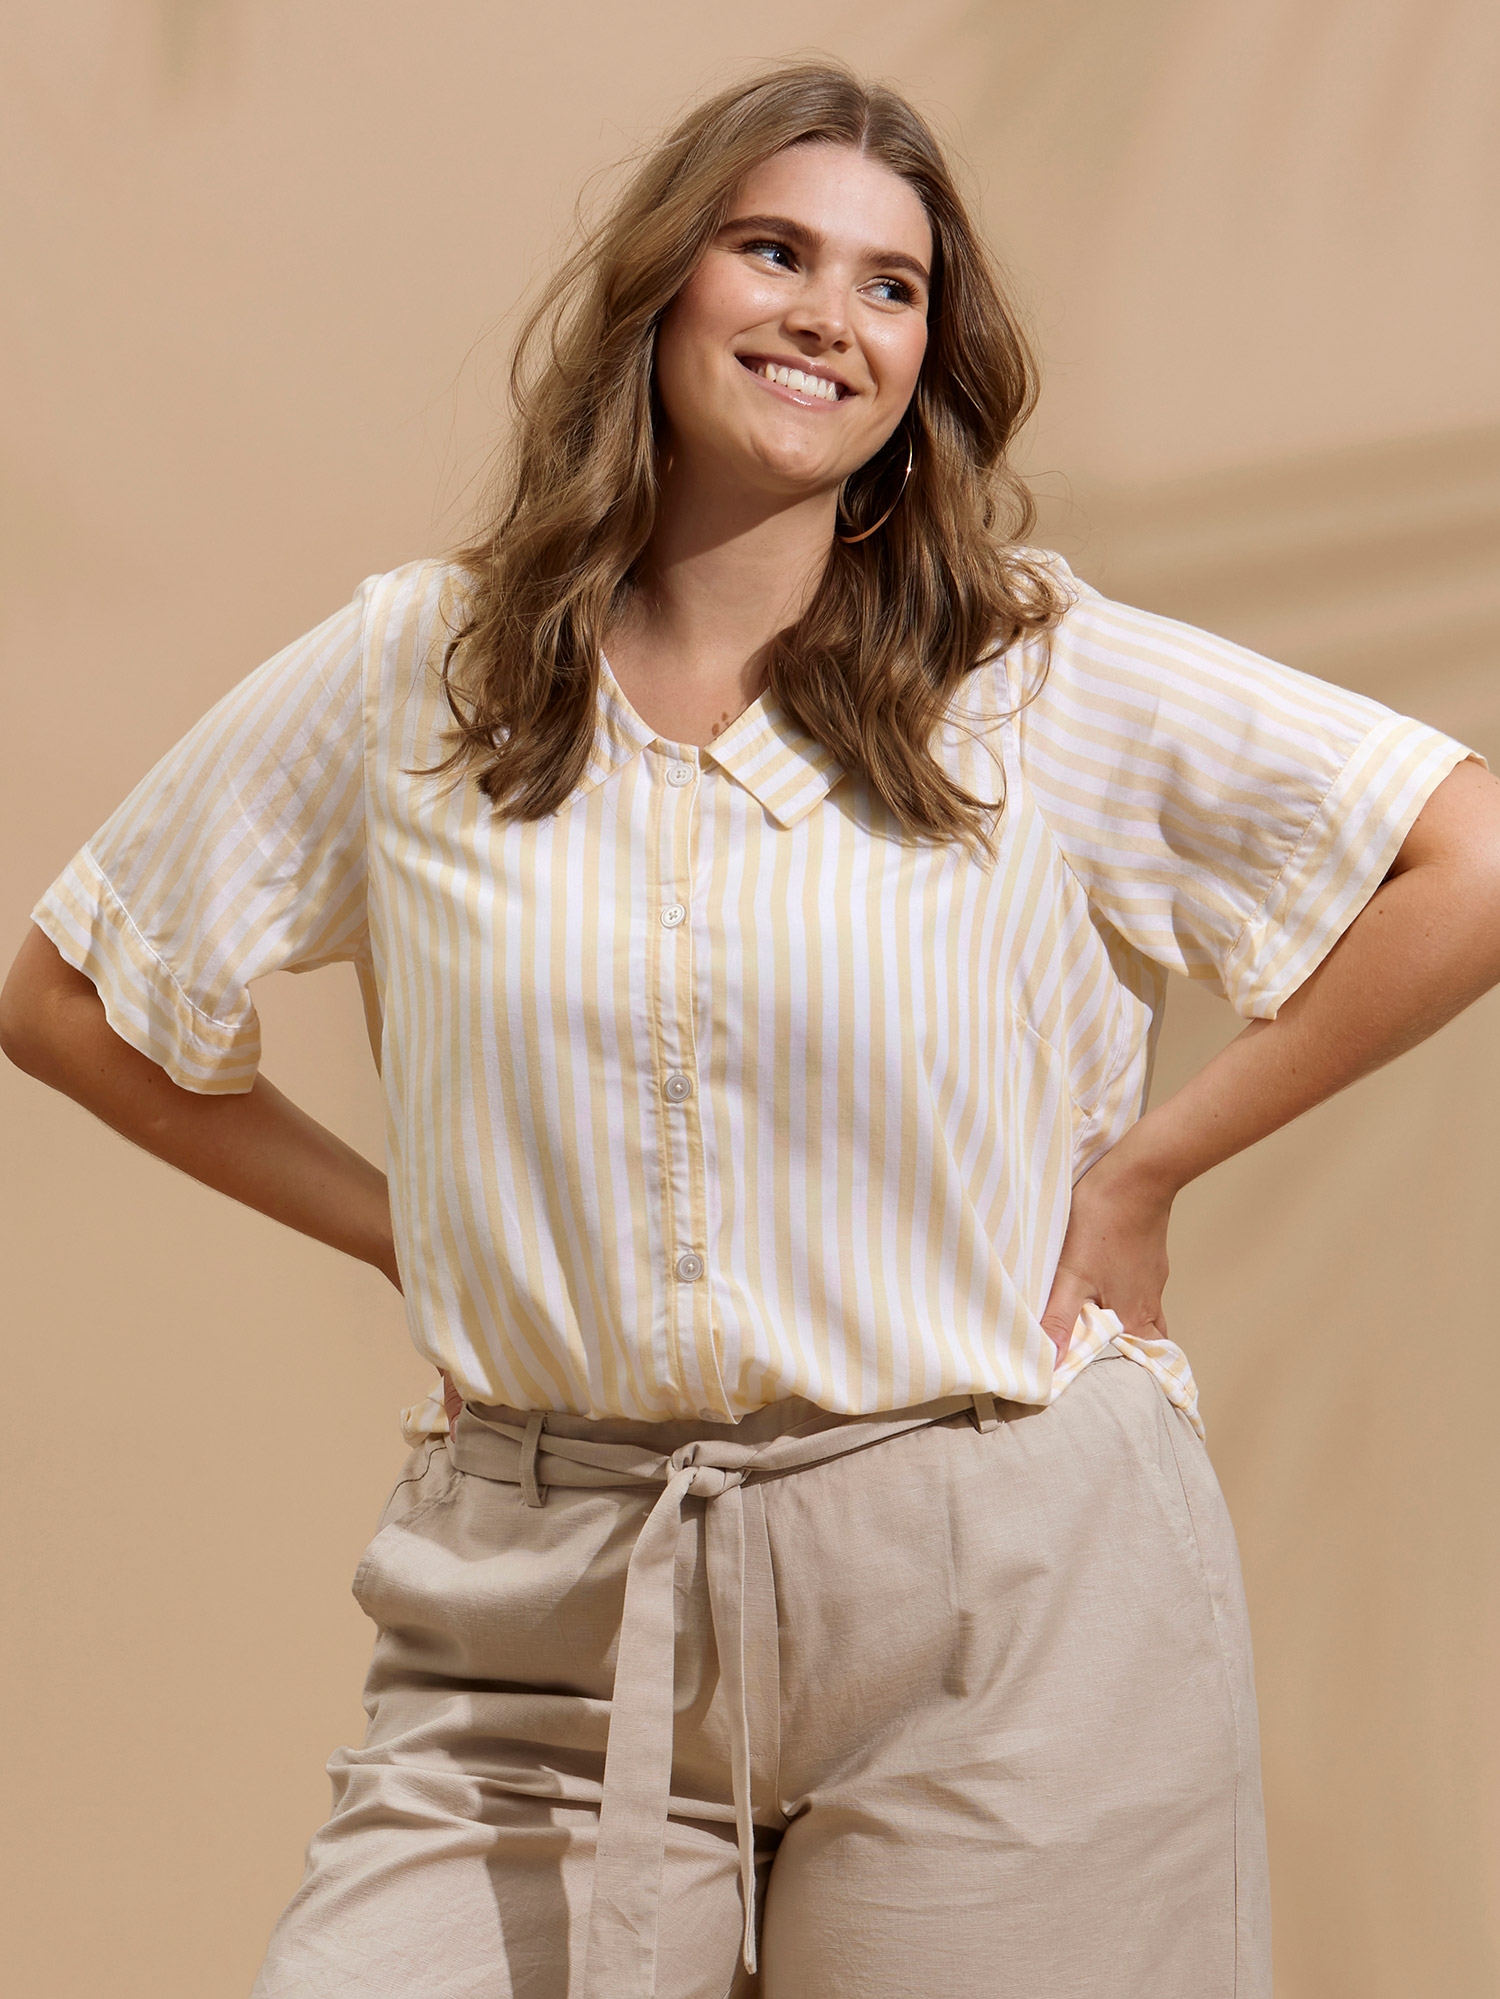 konstant falanks Indflydelse Zhenzi Flot hvid og gul stribet skjorte bluse i viskose, 54-56 / XL Zhenzi  female ⋆ 299.00 DKK